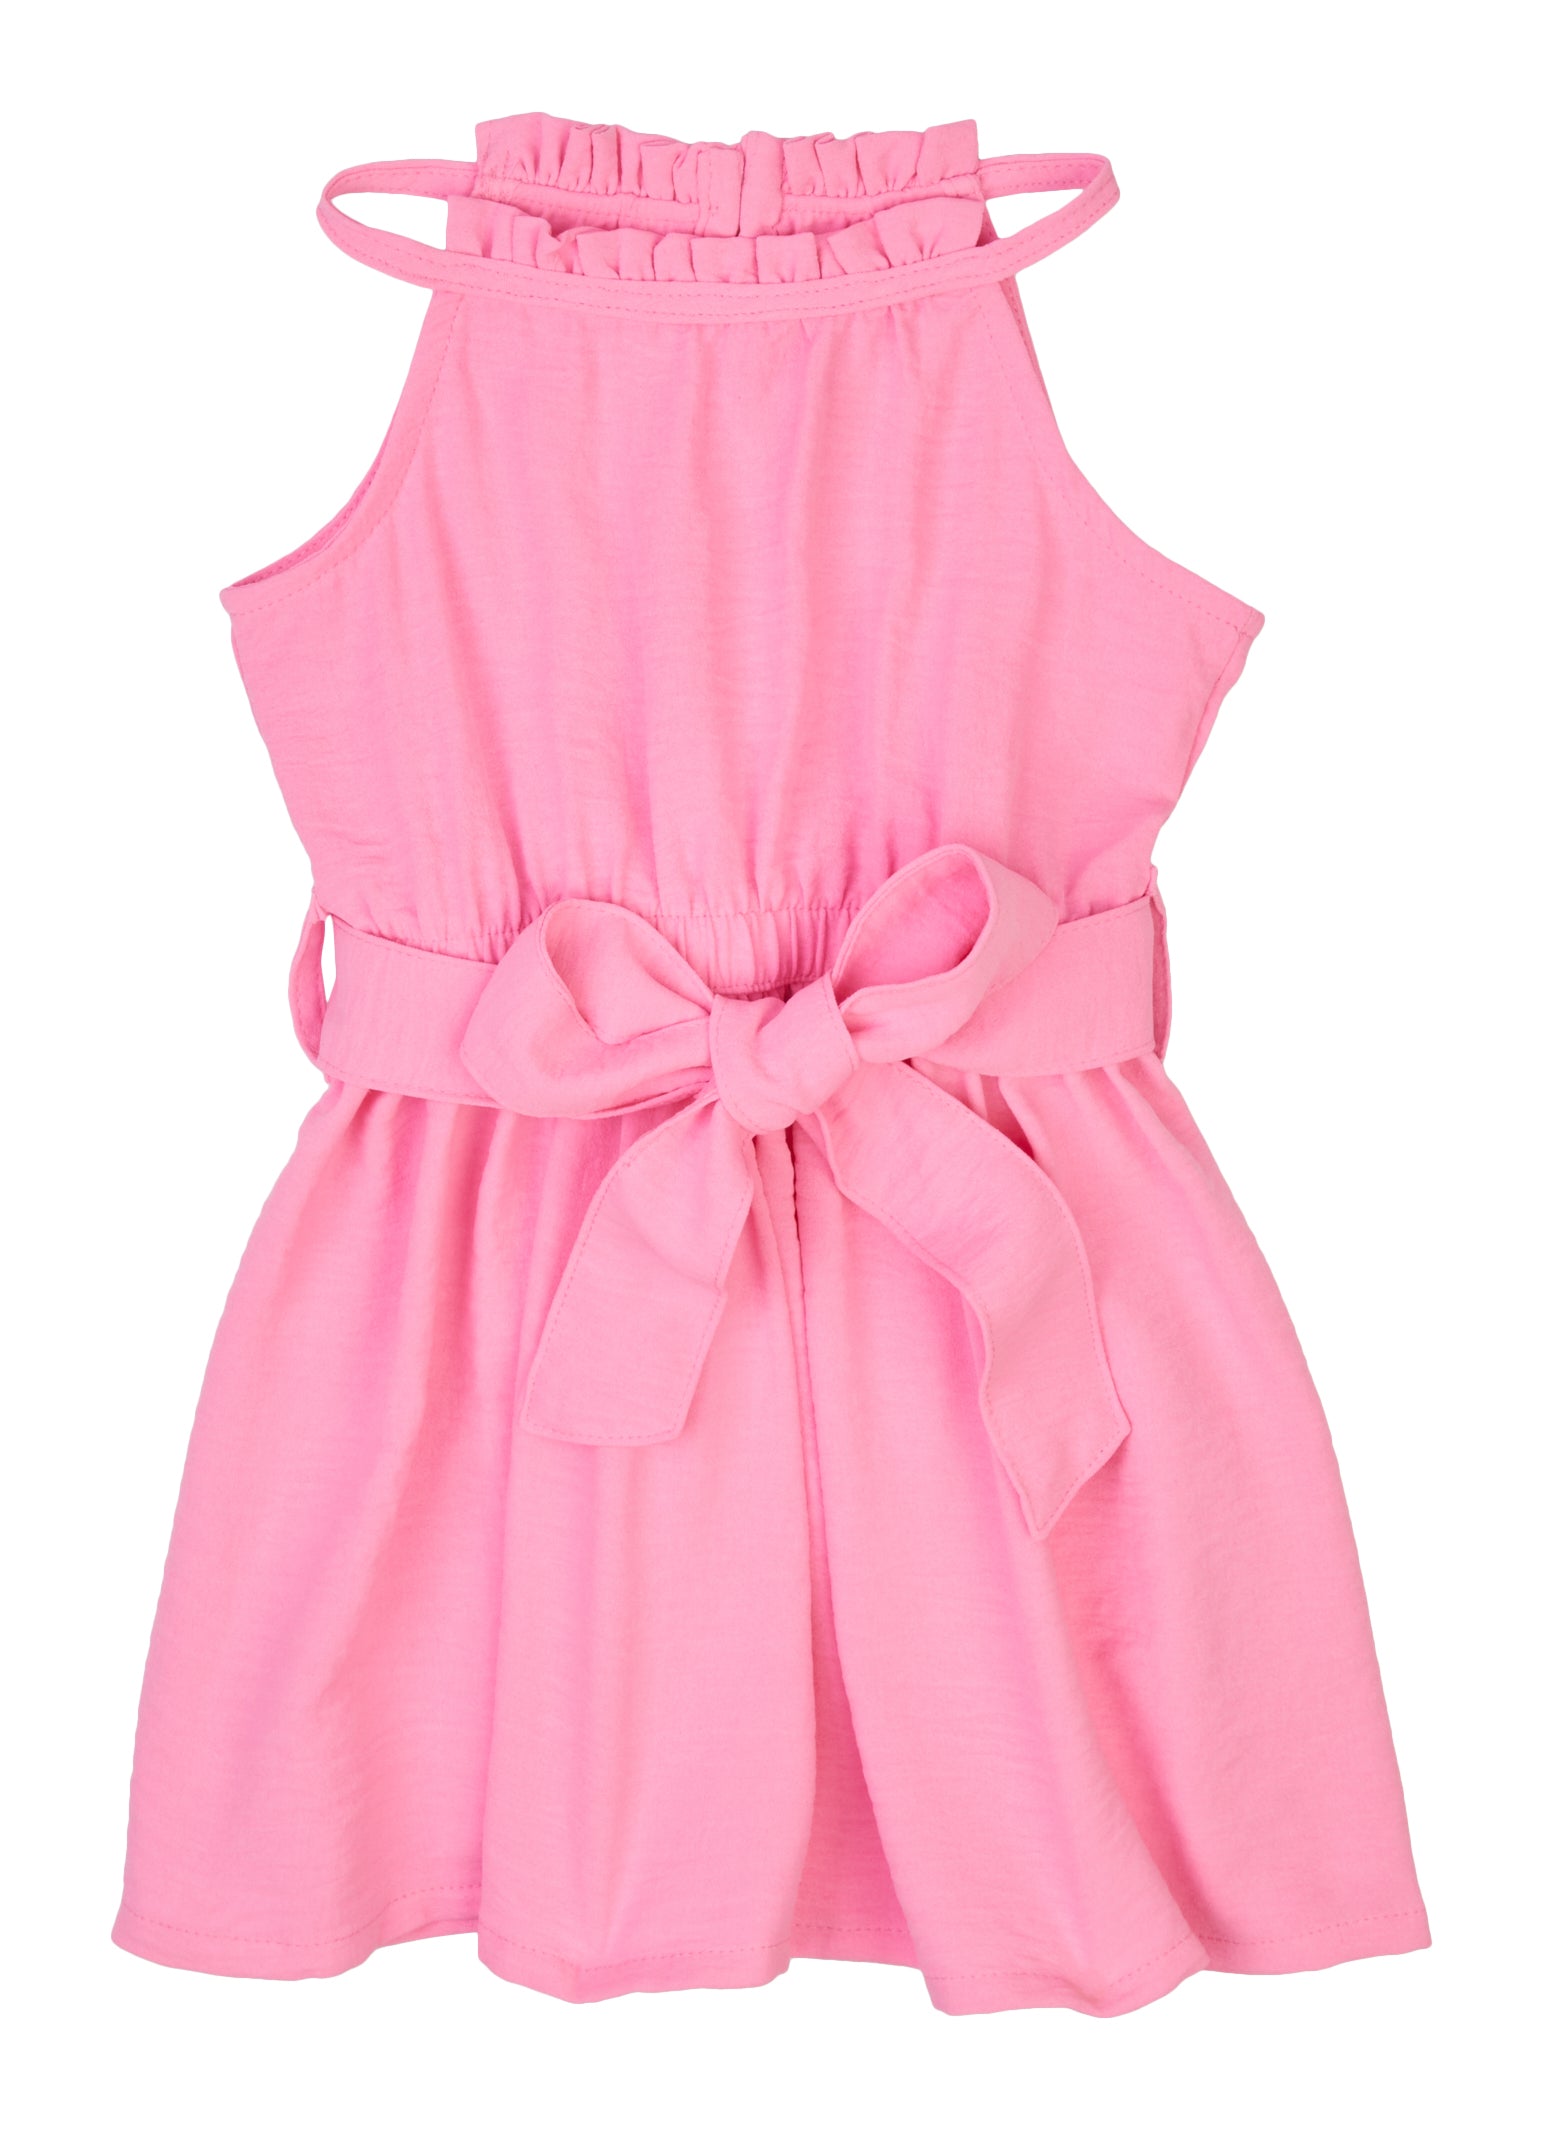 Toddler Girls High Neck Tie Waist Skater Dress, Pink, Size 4T